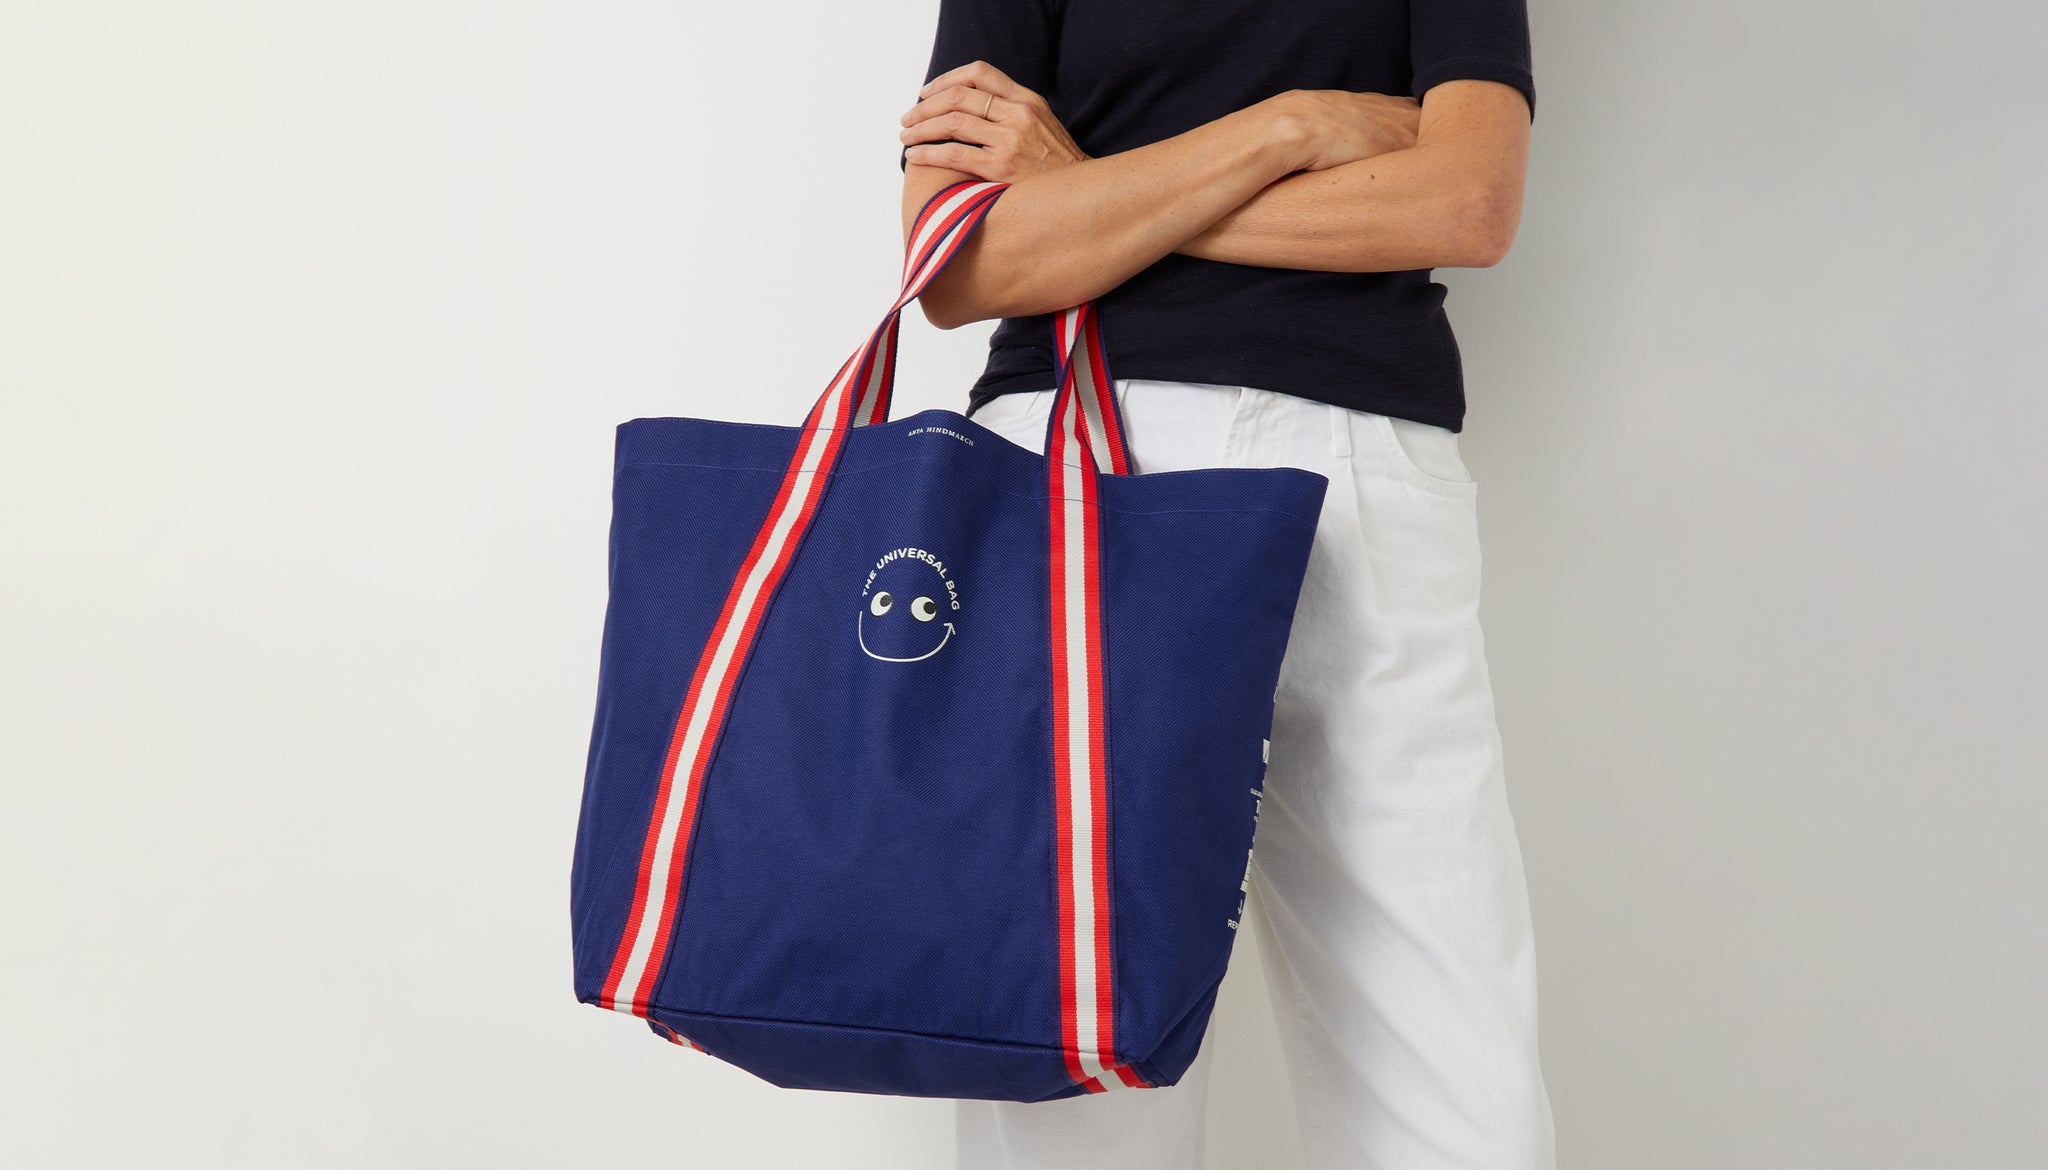 Wholesale Handbags UK. wholesale clutch bag,Leather purse,evening bags. By  Kiss Kerry LTD